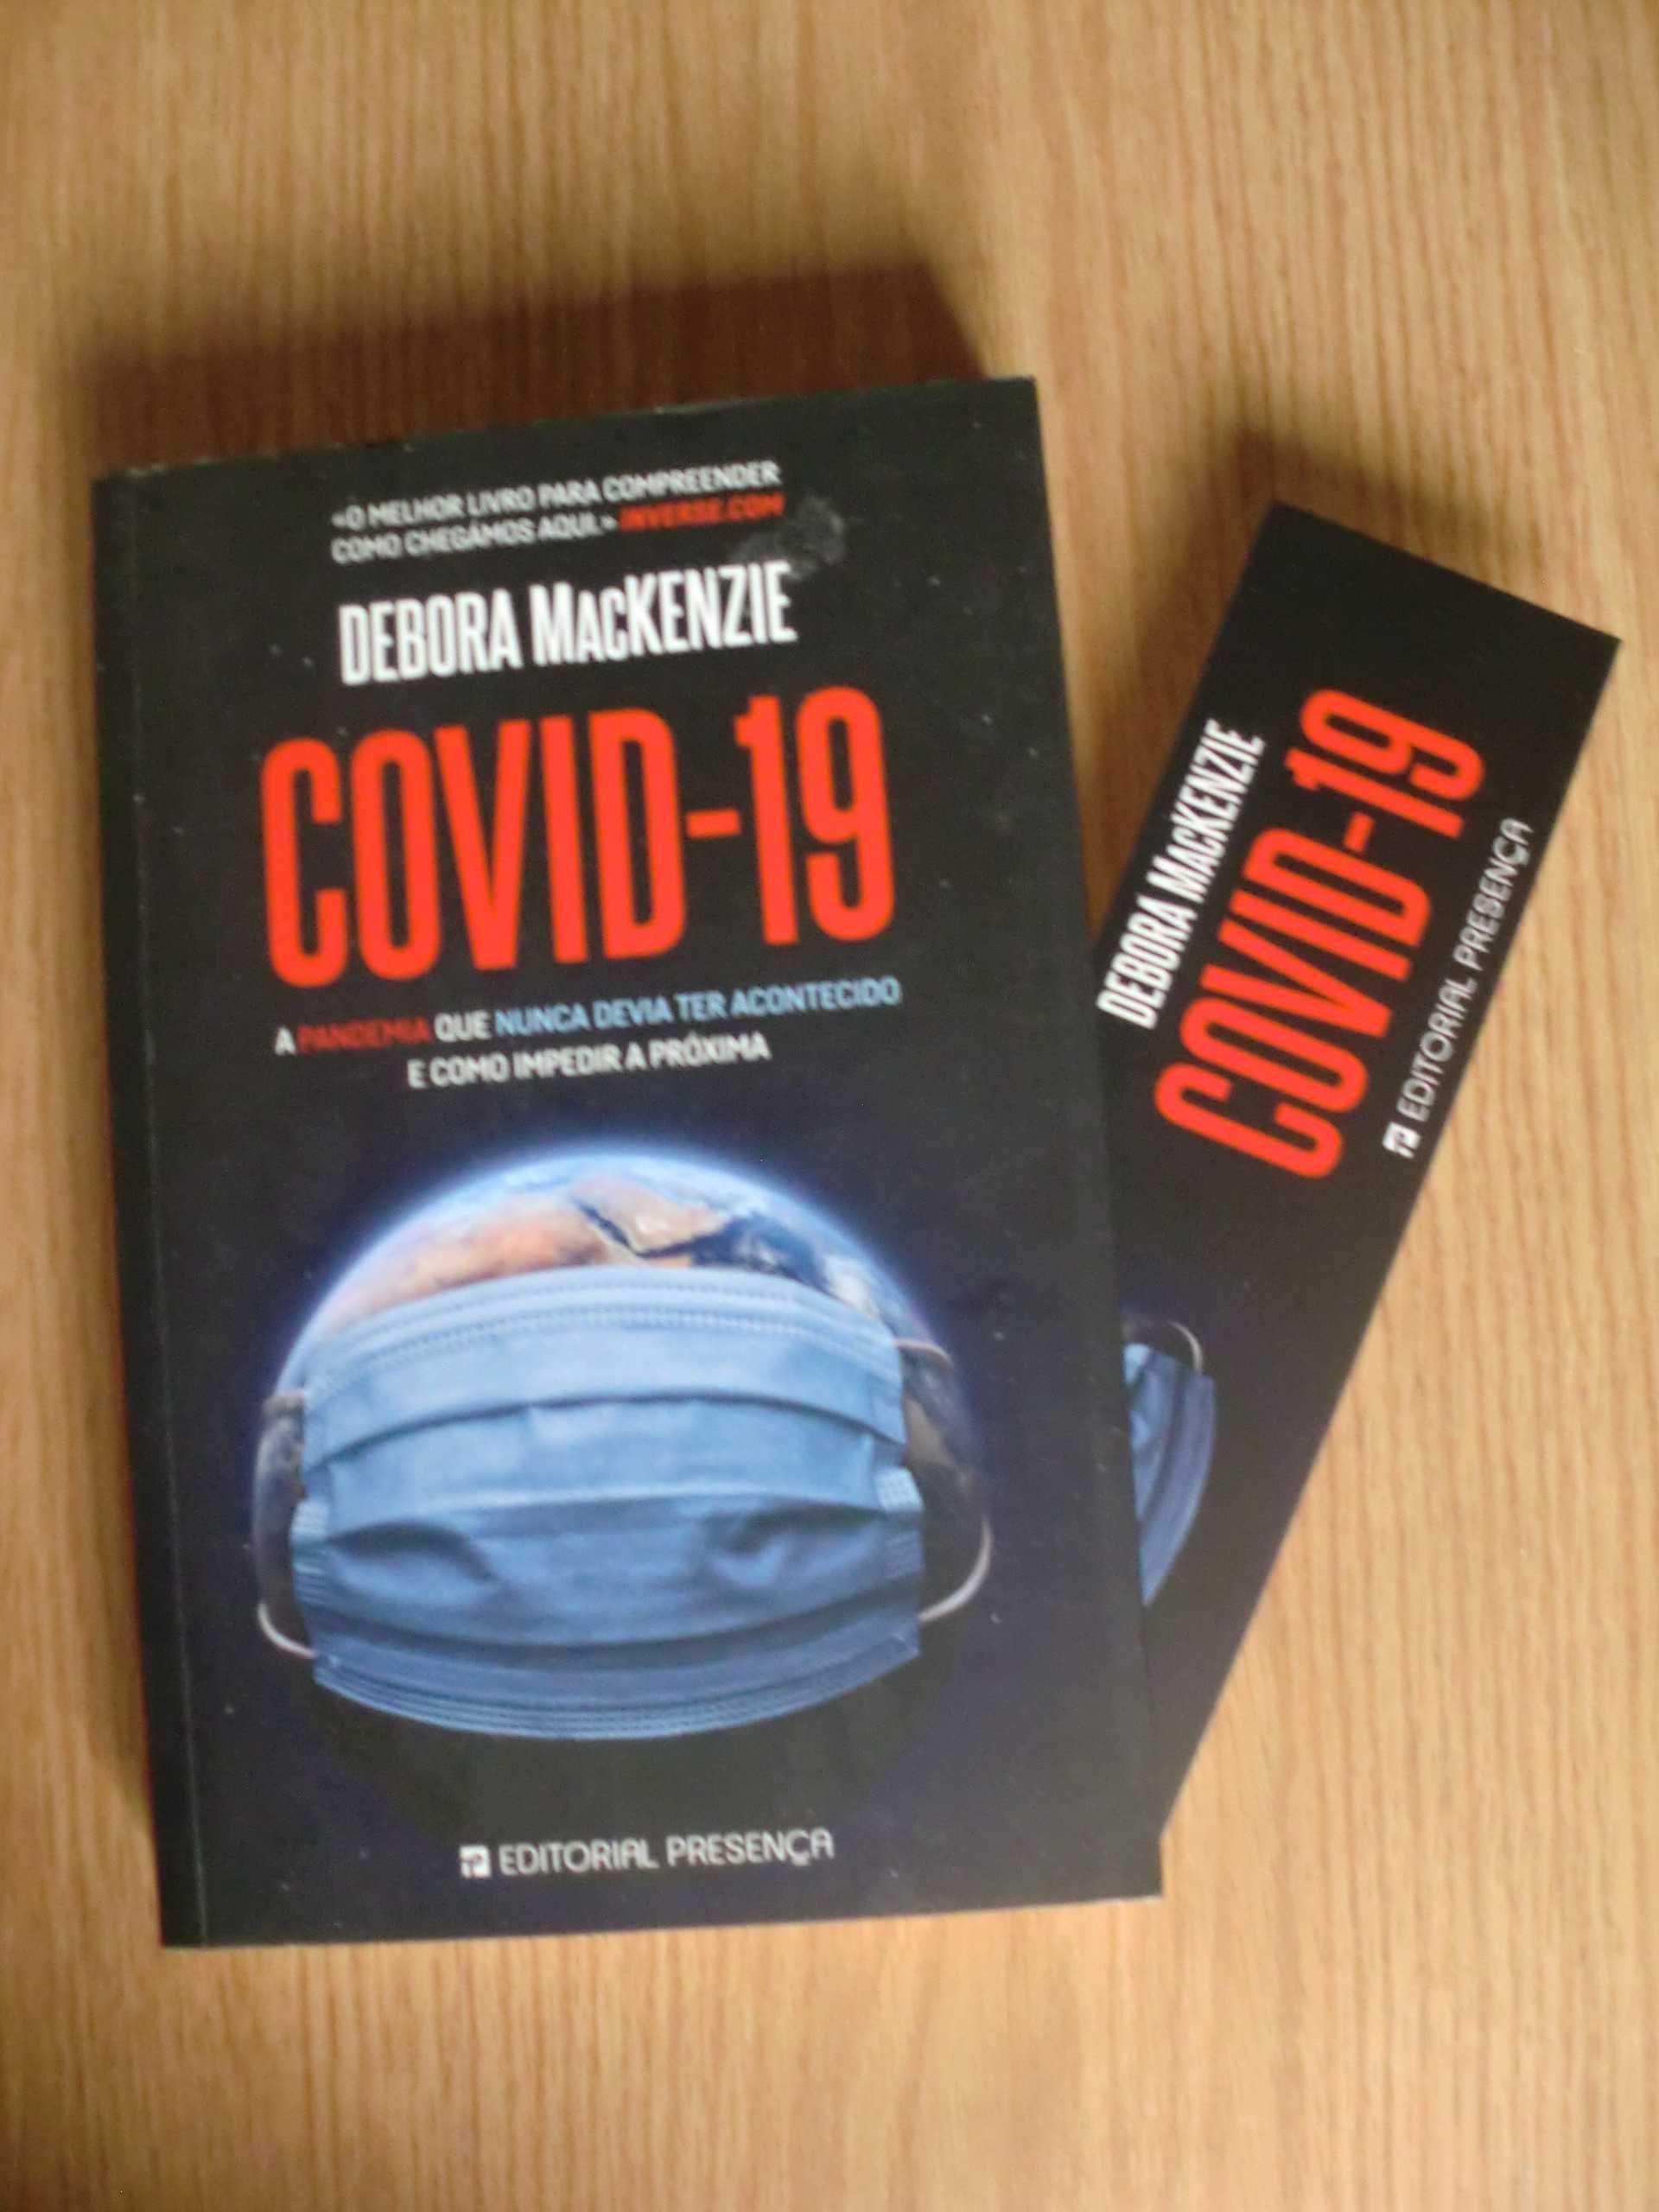 COVID-19
de Debora MacKenzie